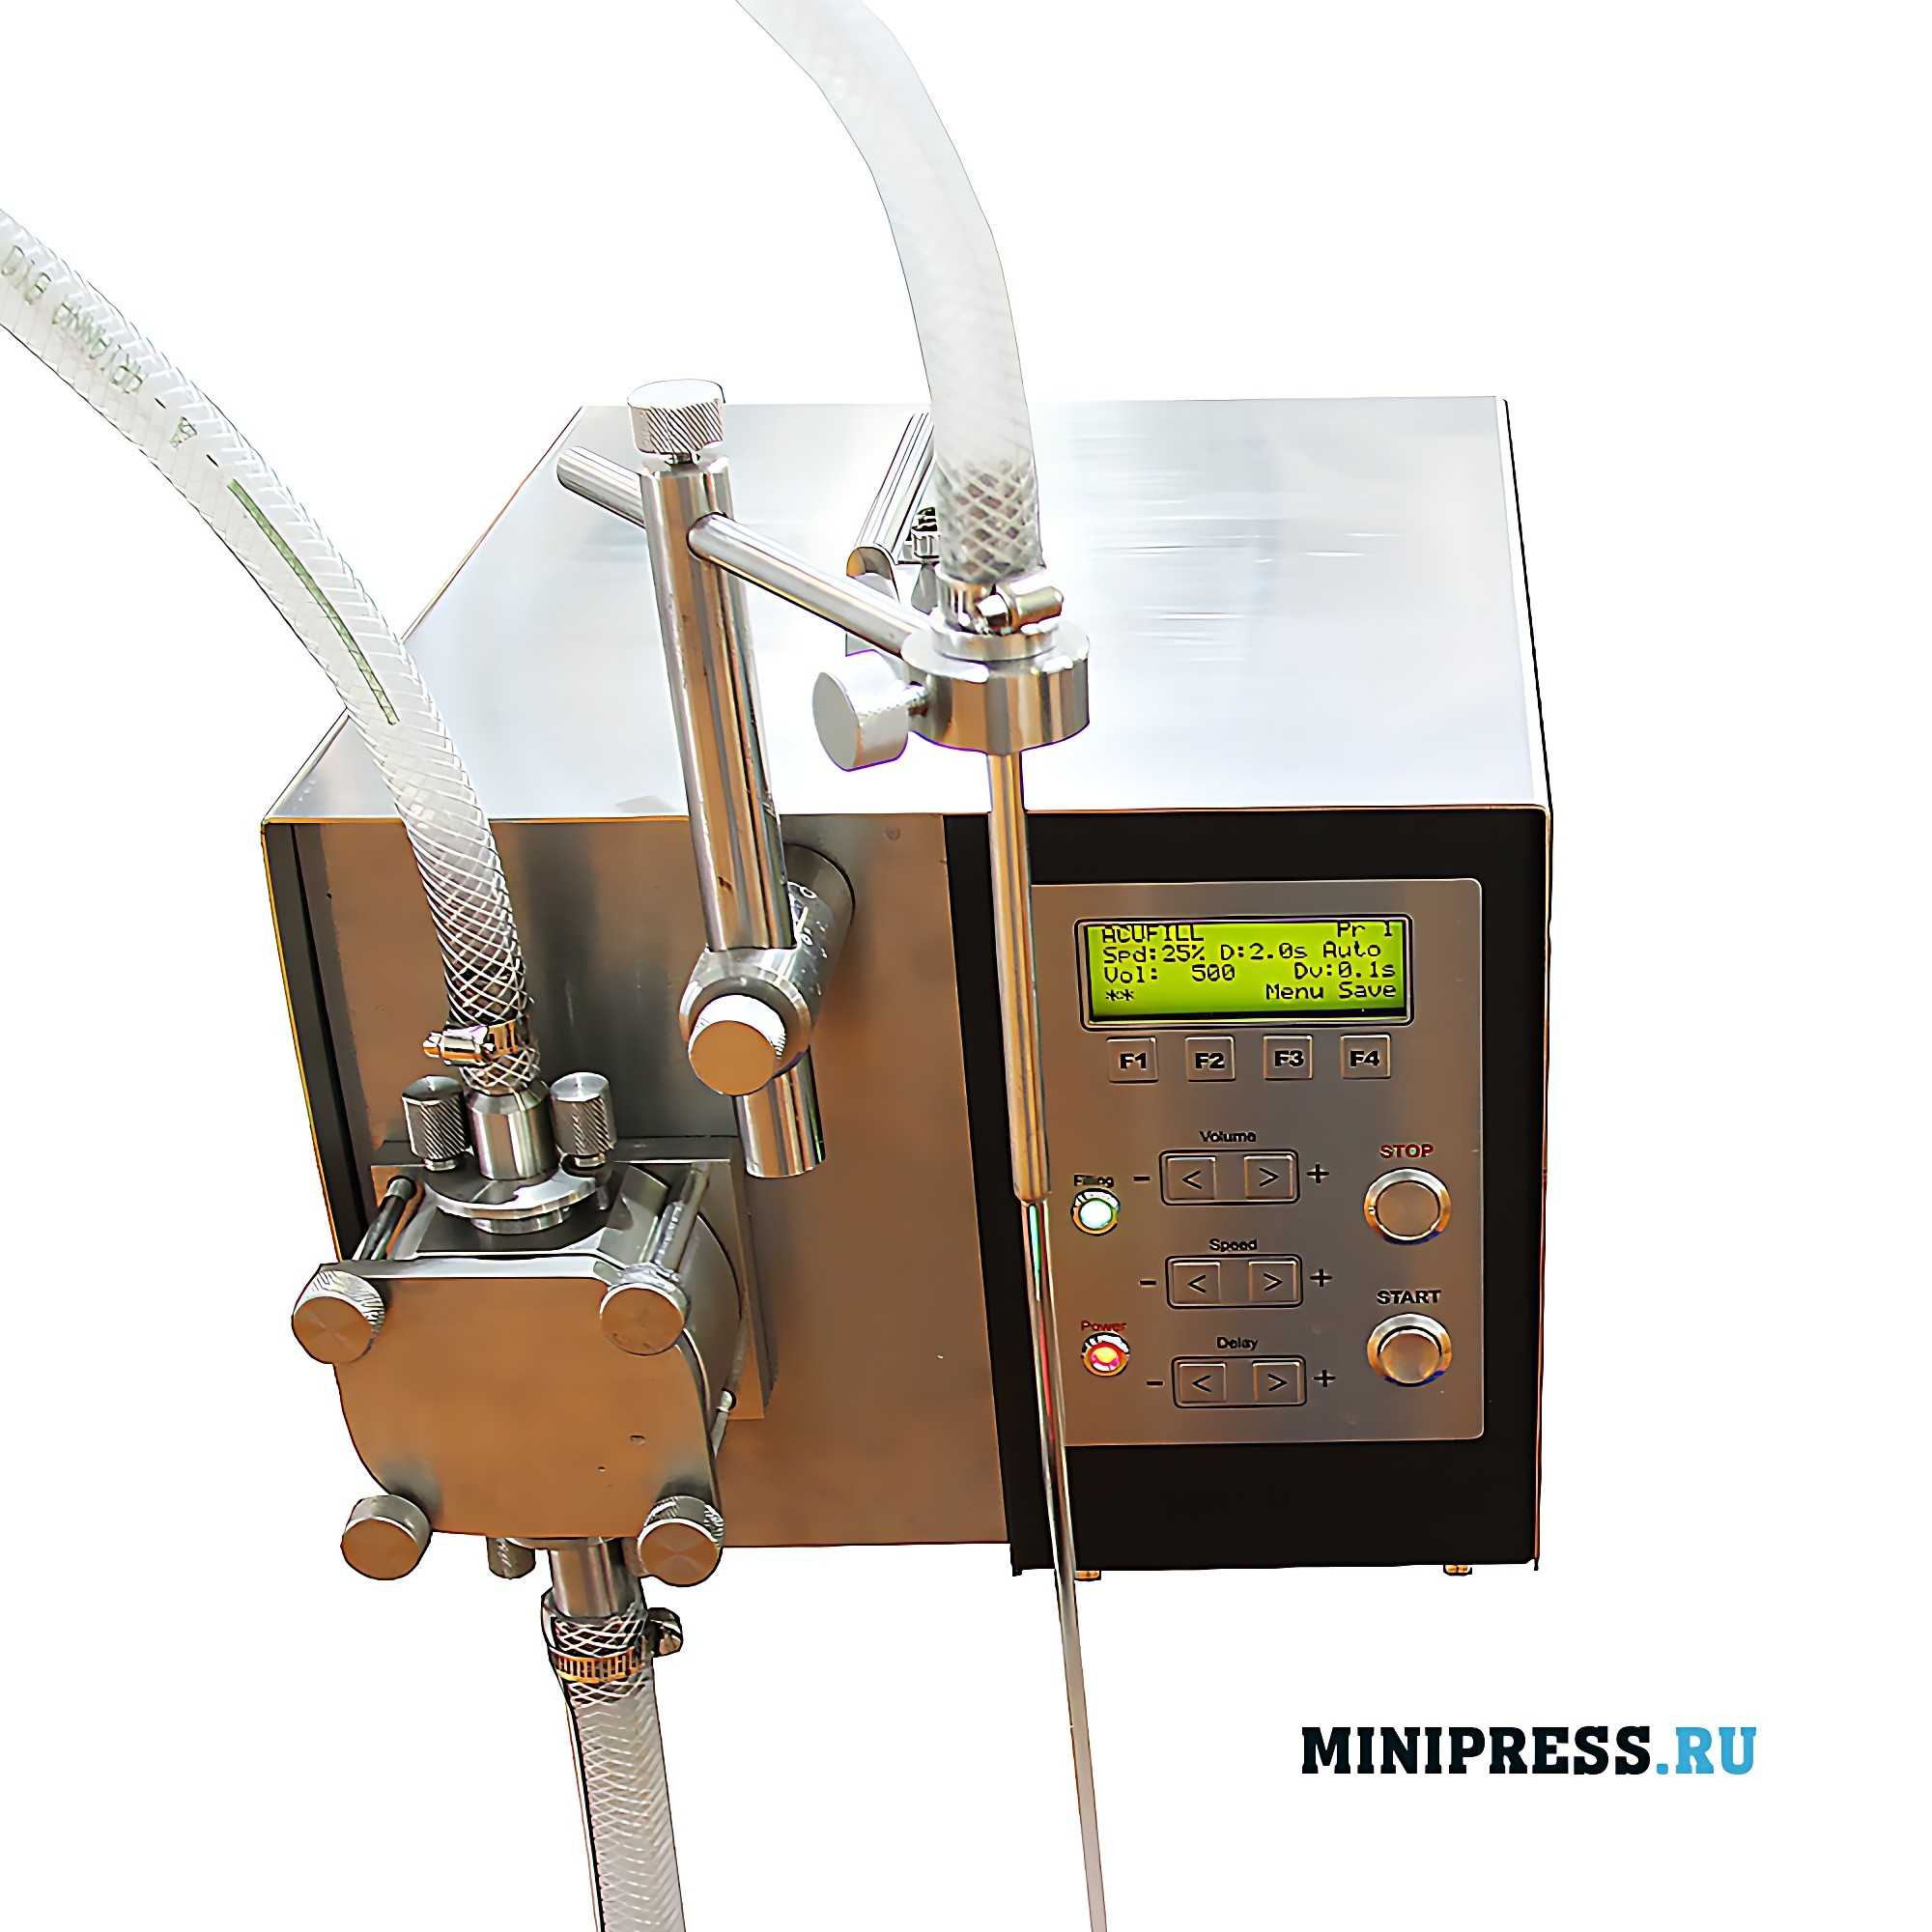 Tabletop liquid filling machine RM-01